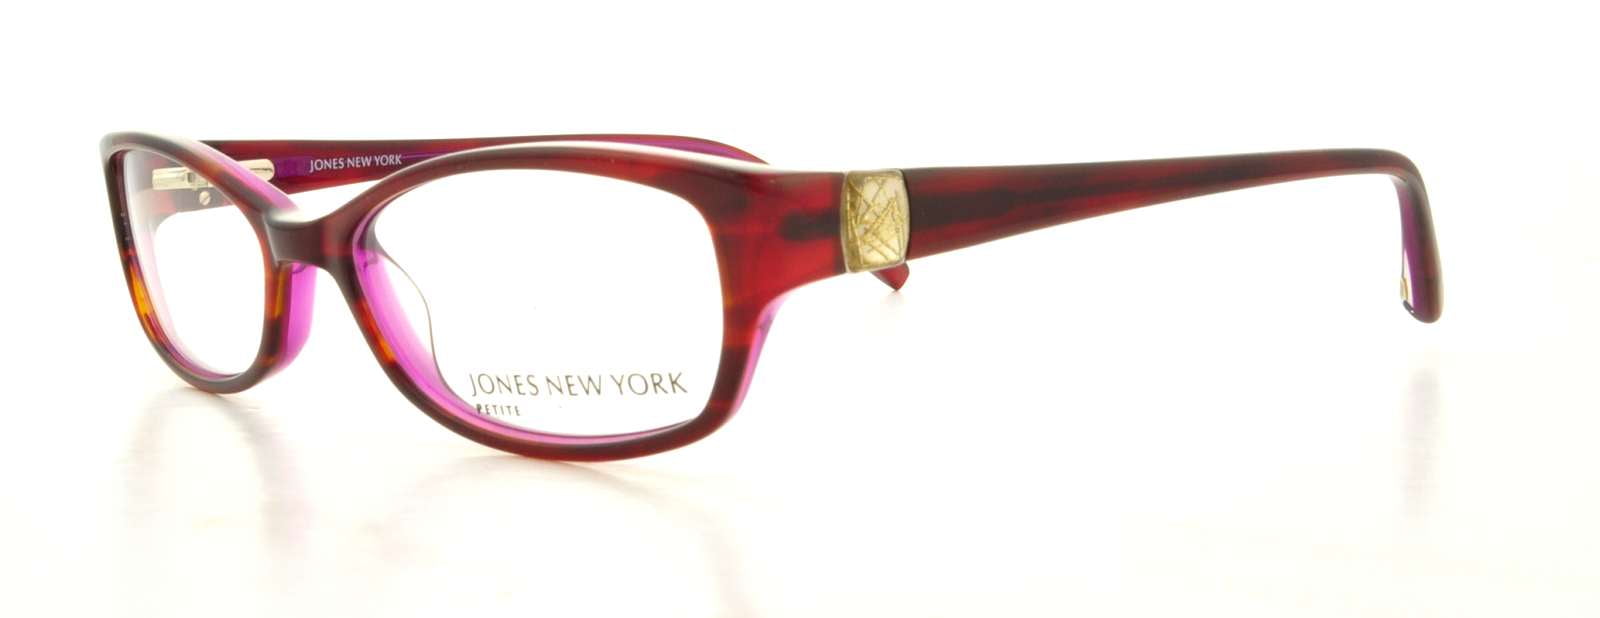 Accessoires Zonnebrillen & Eyewear Brillen Upload DR.EYEGLASS RX in message tab Jones New York J214 Brown Purple Sz 49/15 Order with your prescription lens! 